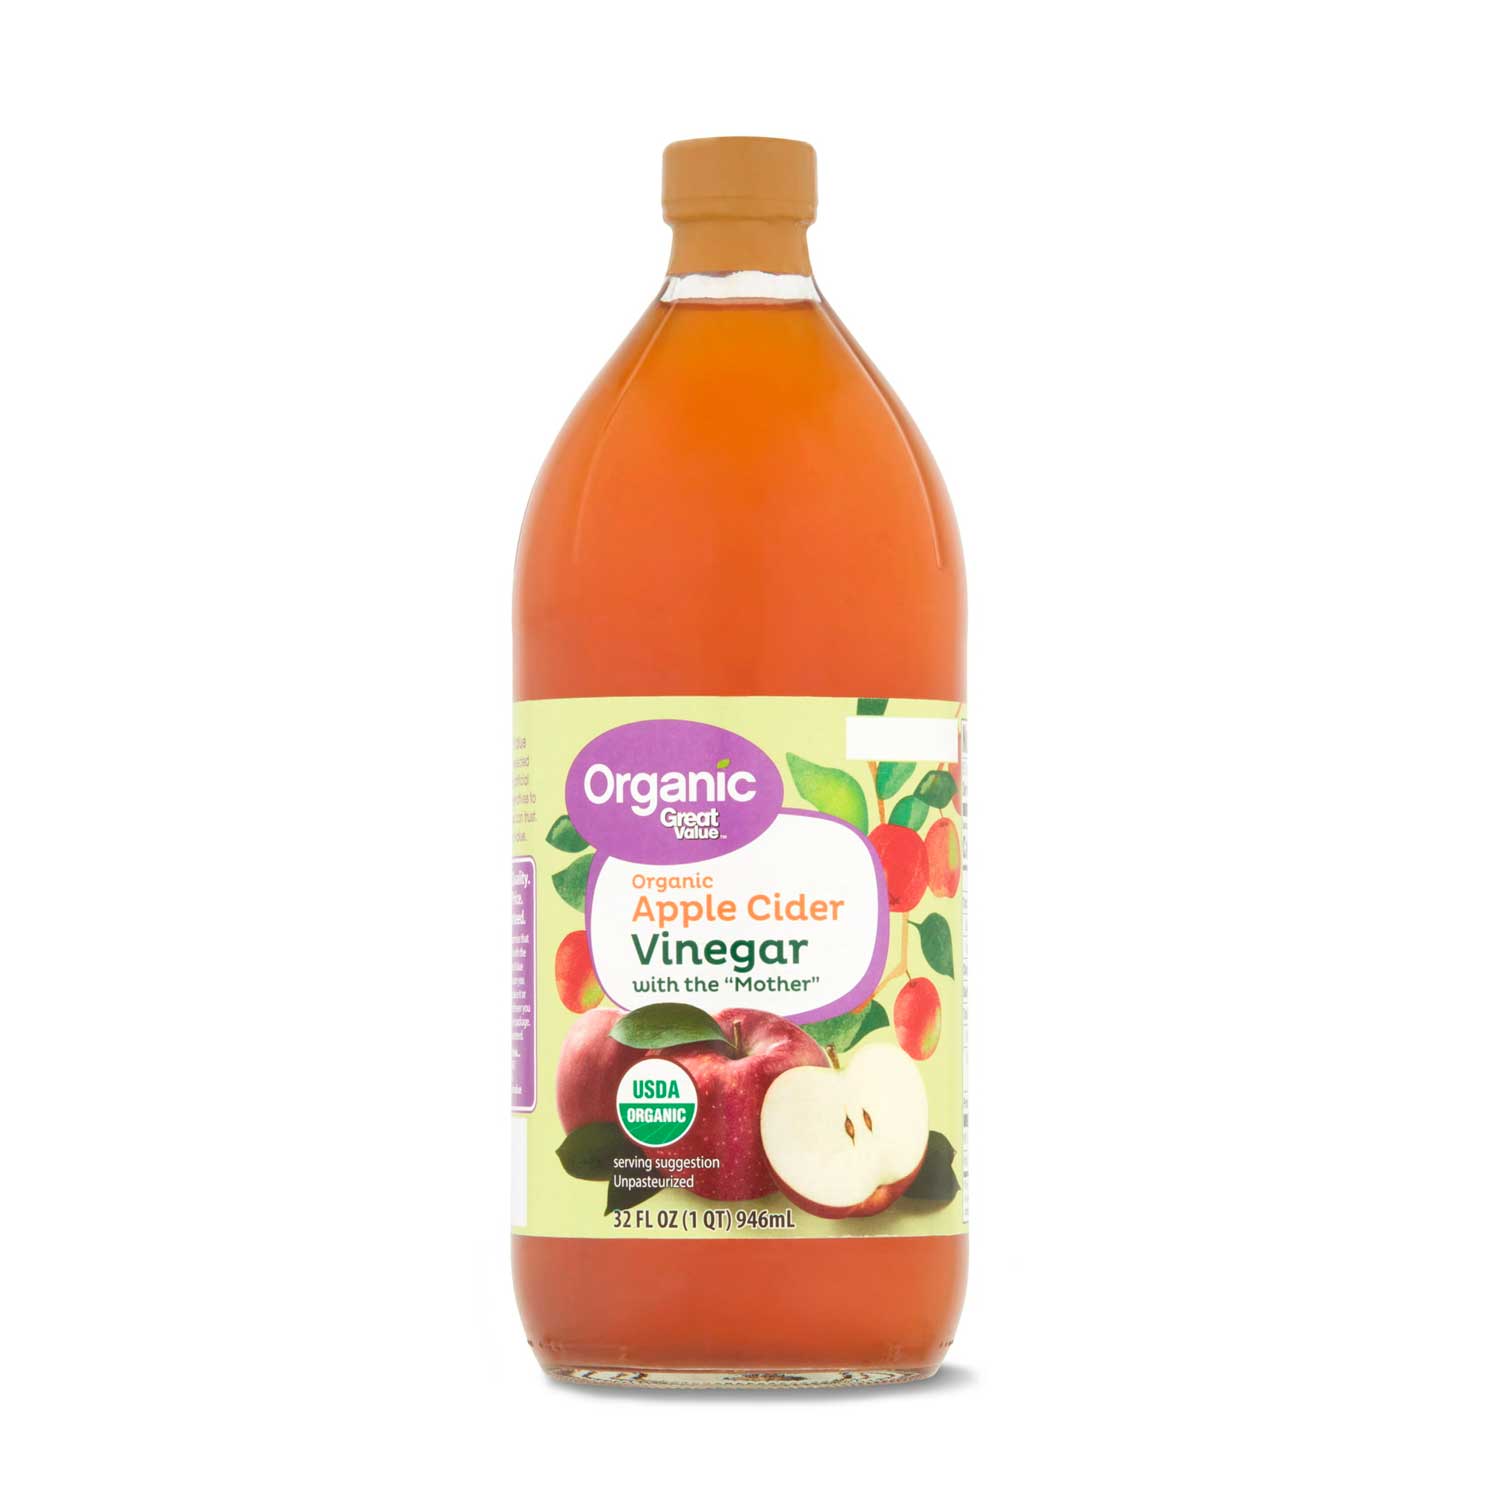 Comprar Vinagre de sidra de manzana if en Supermercados MAS Online